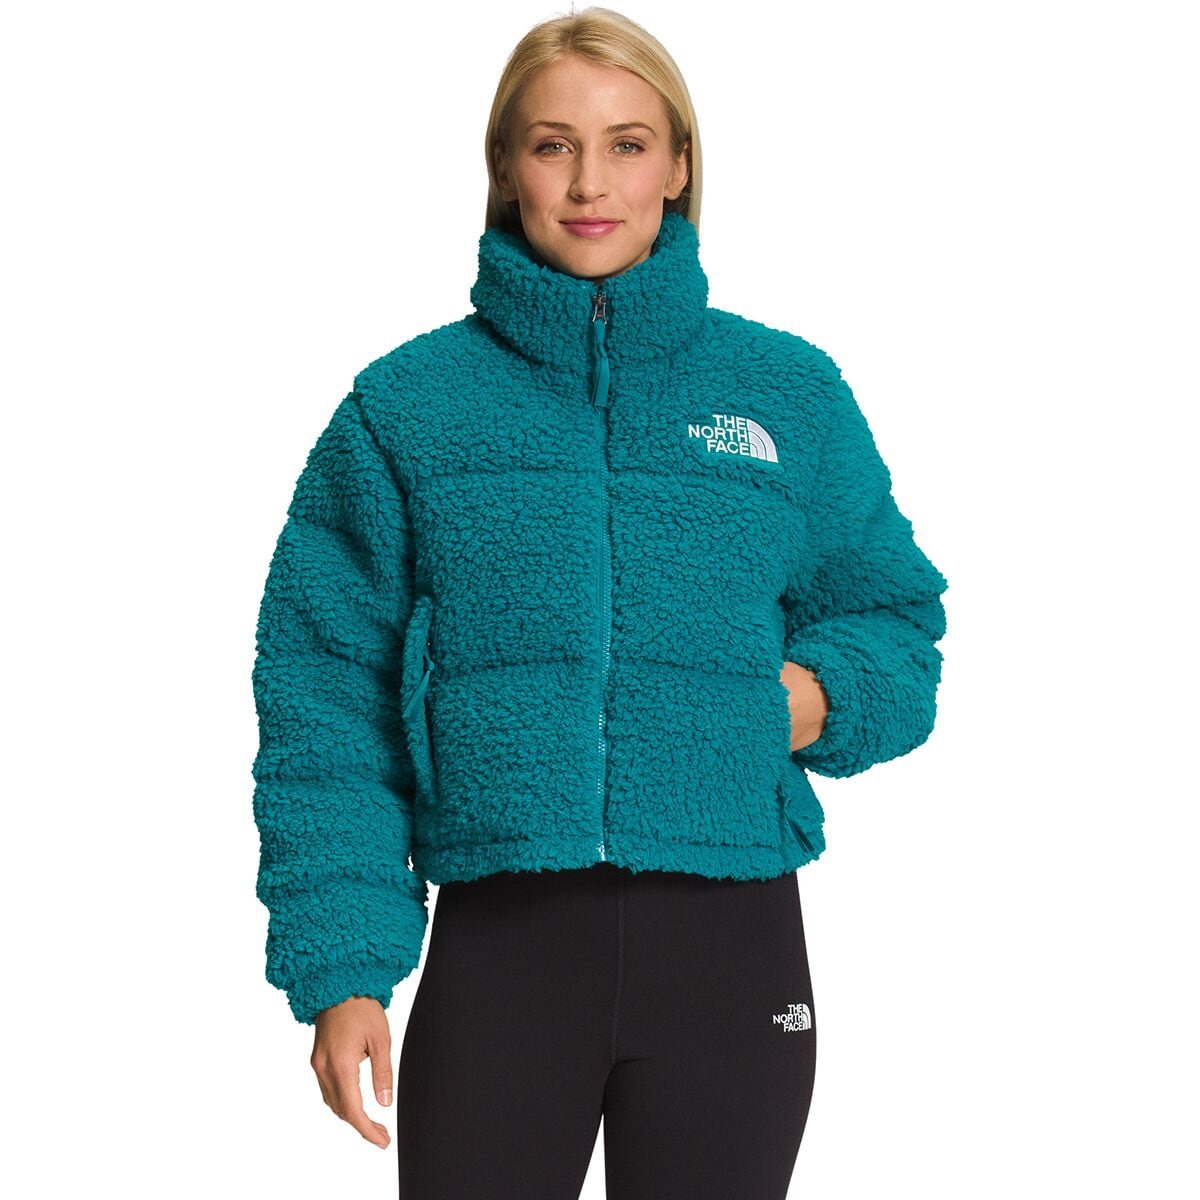 The North Face Eco Jacquard Extreme Pile Full-Zip Jacket